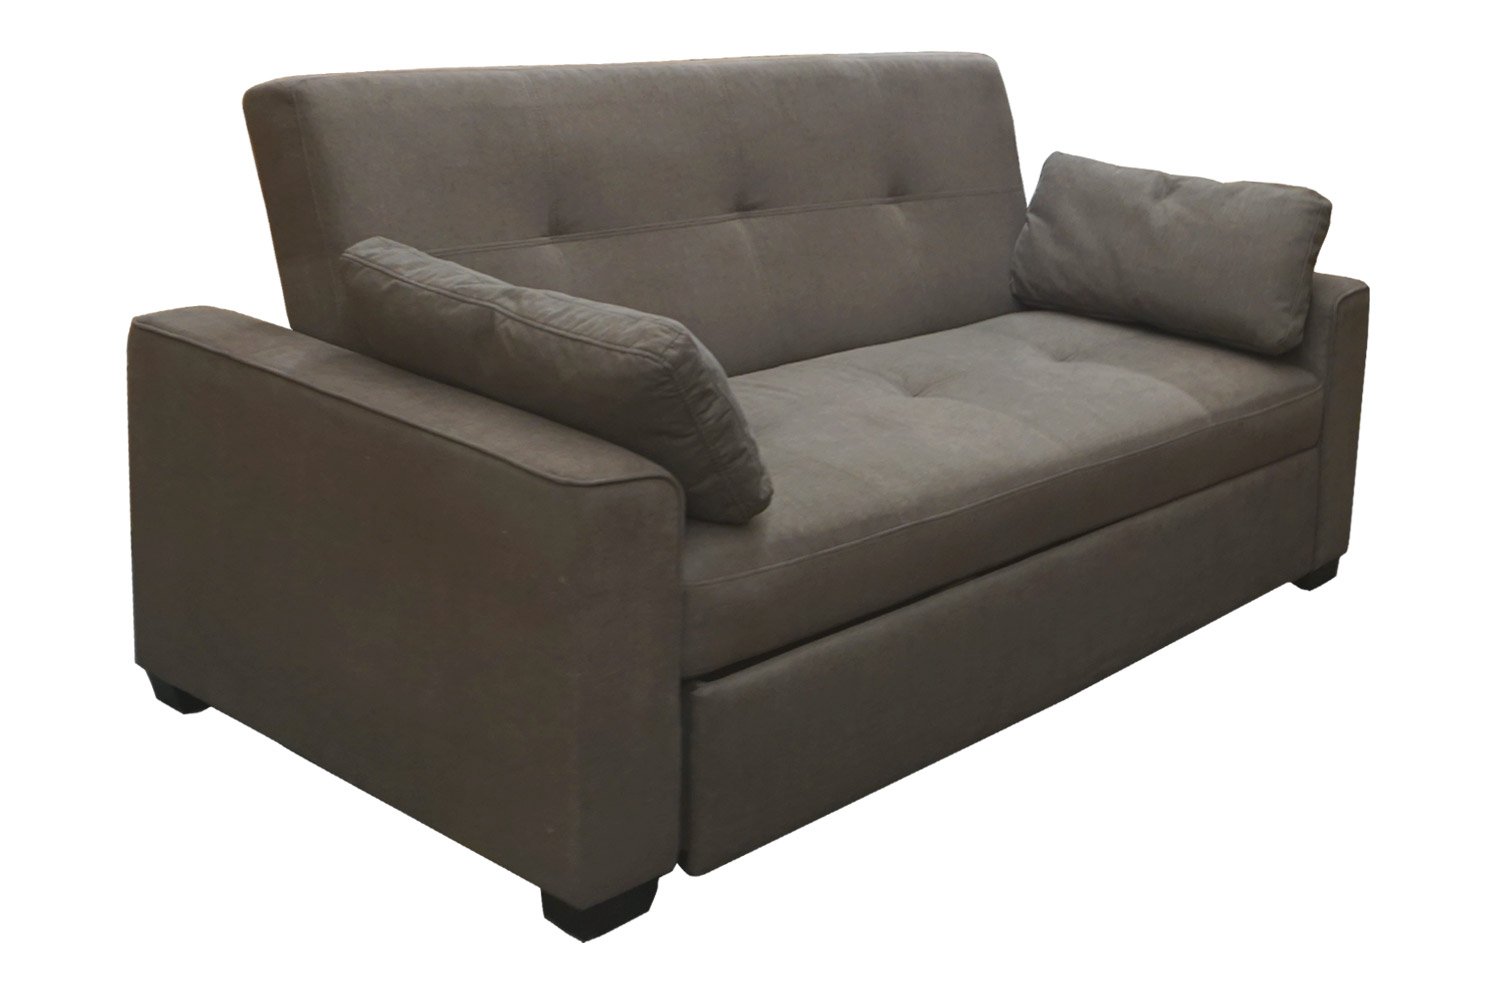 eco friendly tufted leather sofa